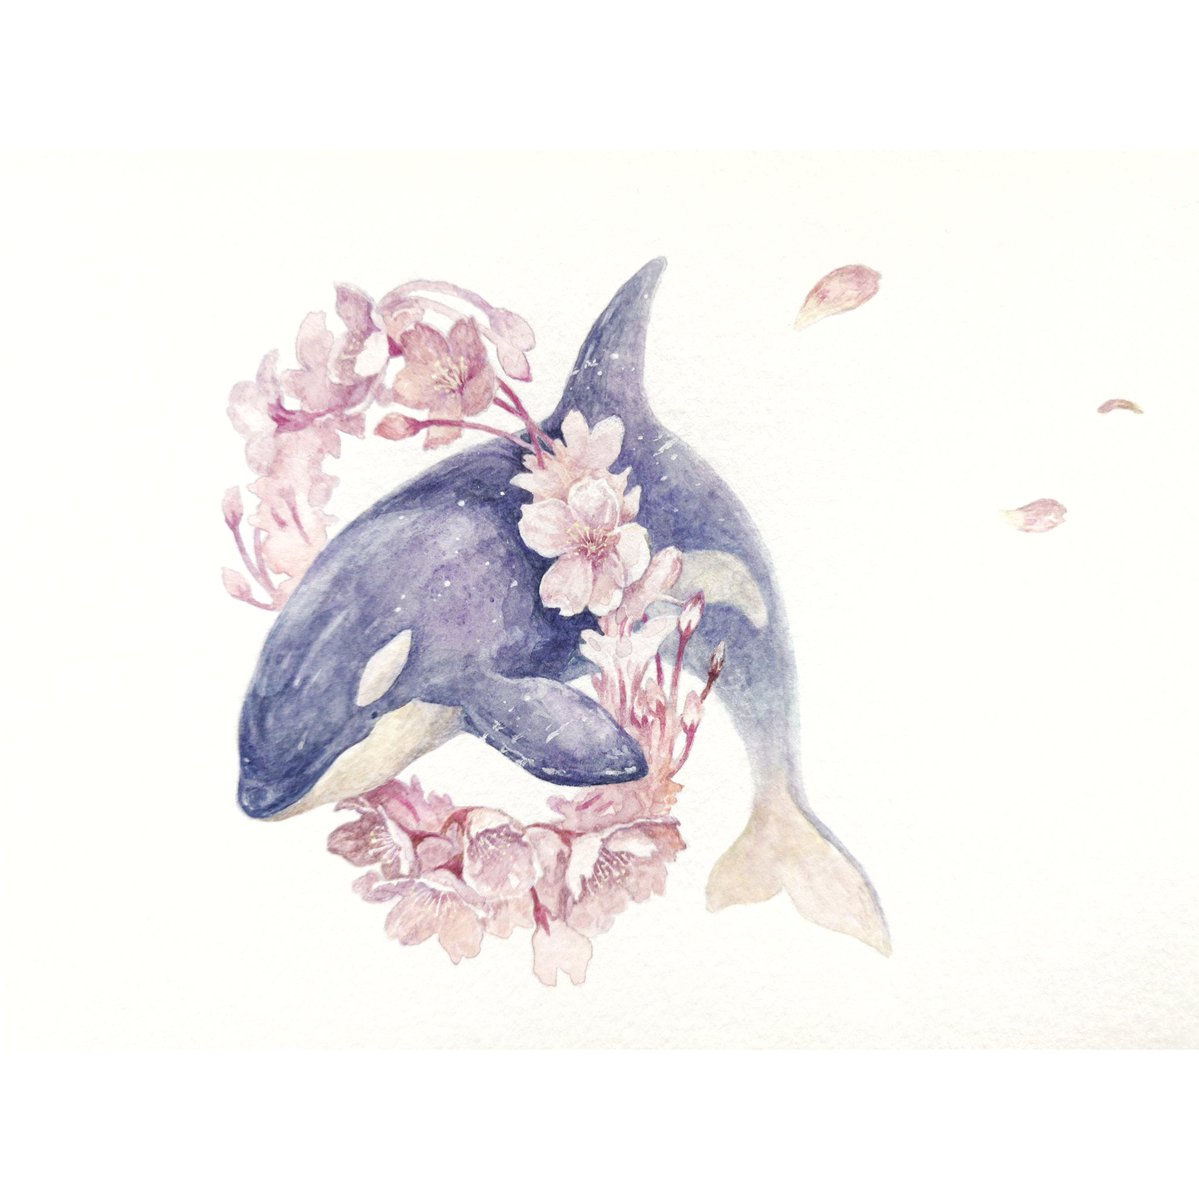 Hirotoshi Kanou 桜にシャチ 透明水彩 シャチ シャチ好き イラストすきな人と繋がりたい 絵描きさんと繫がりたい 桜すきな人と繋がりたい お花見